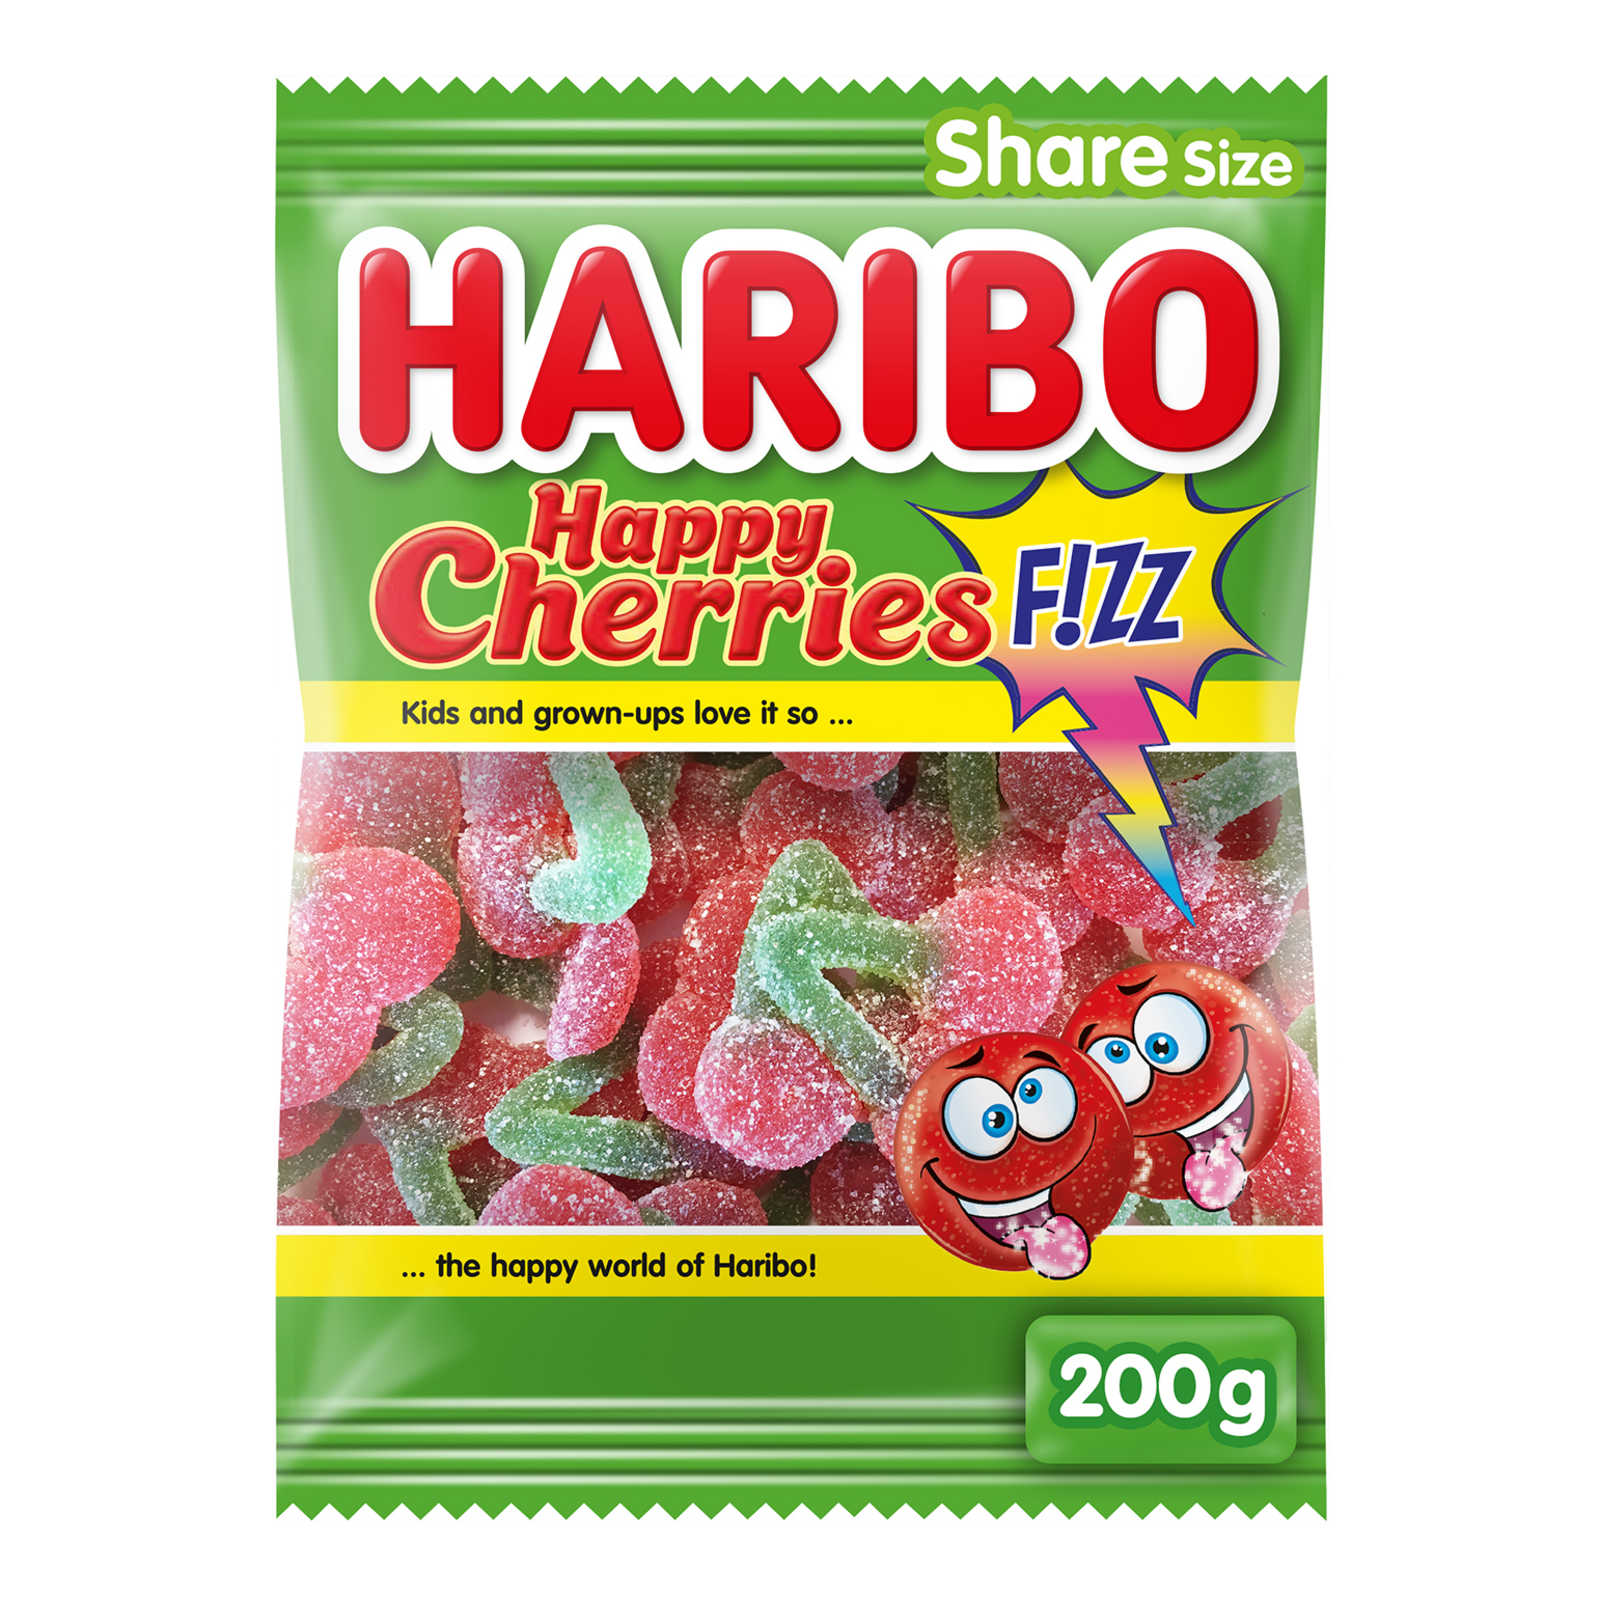 Haribo Happy Cherries Gummi Candy